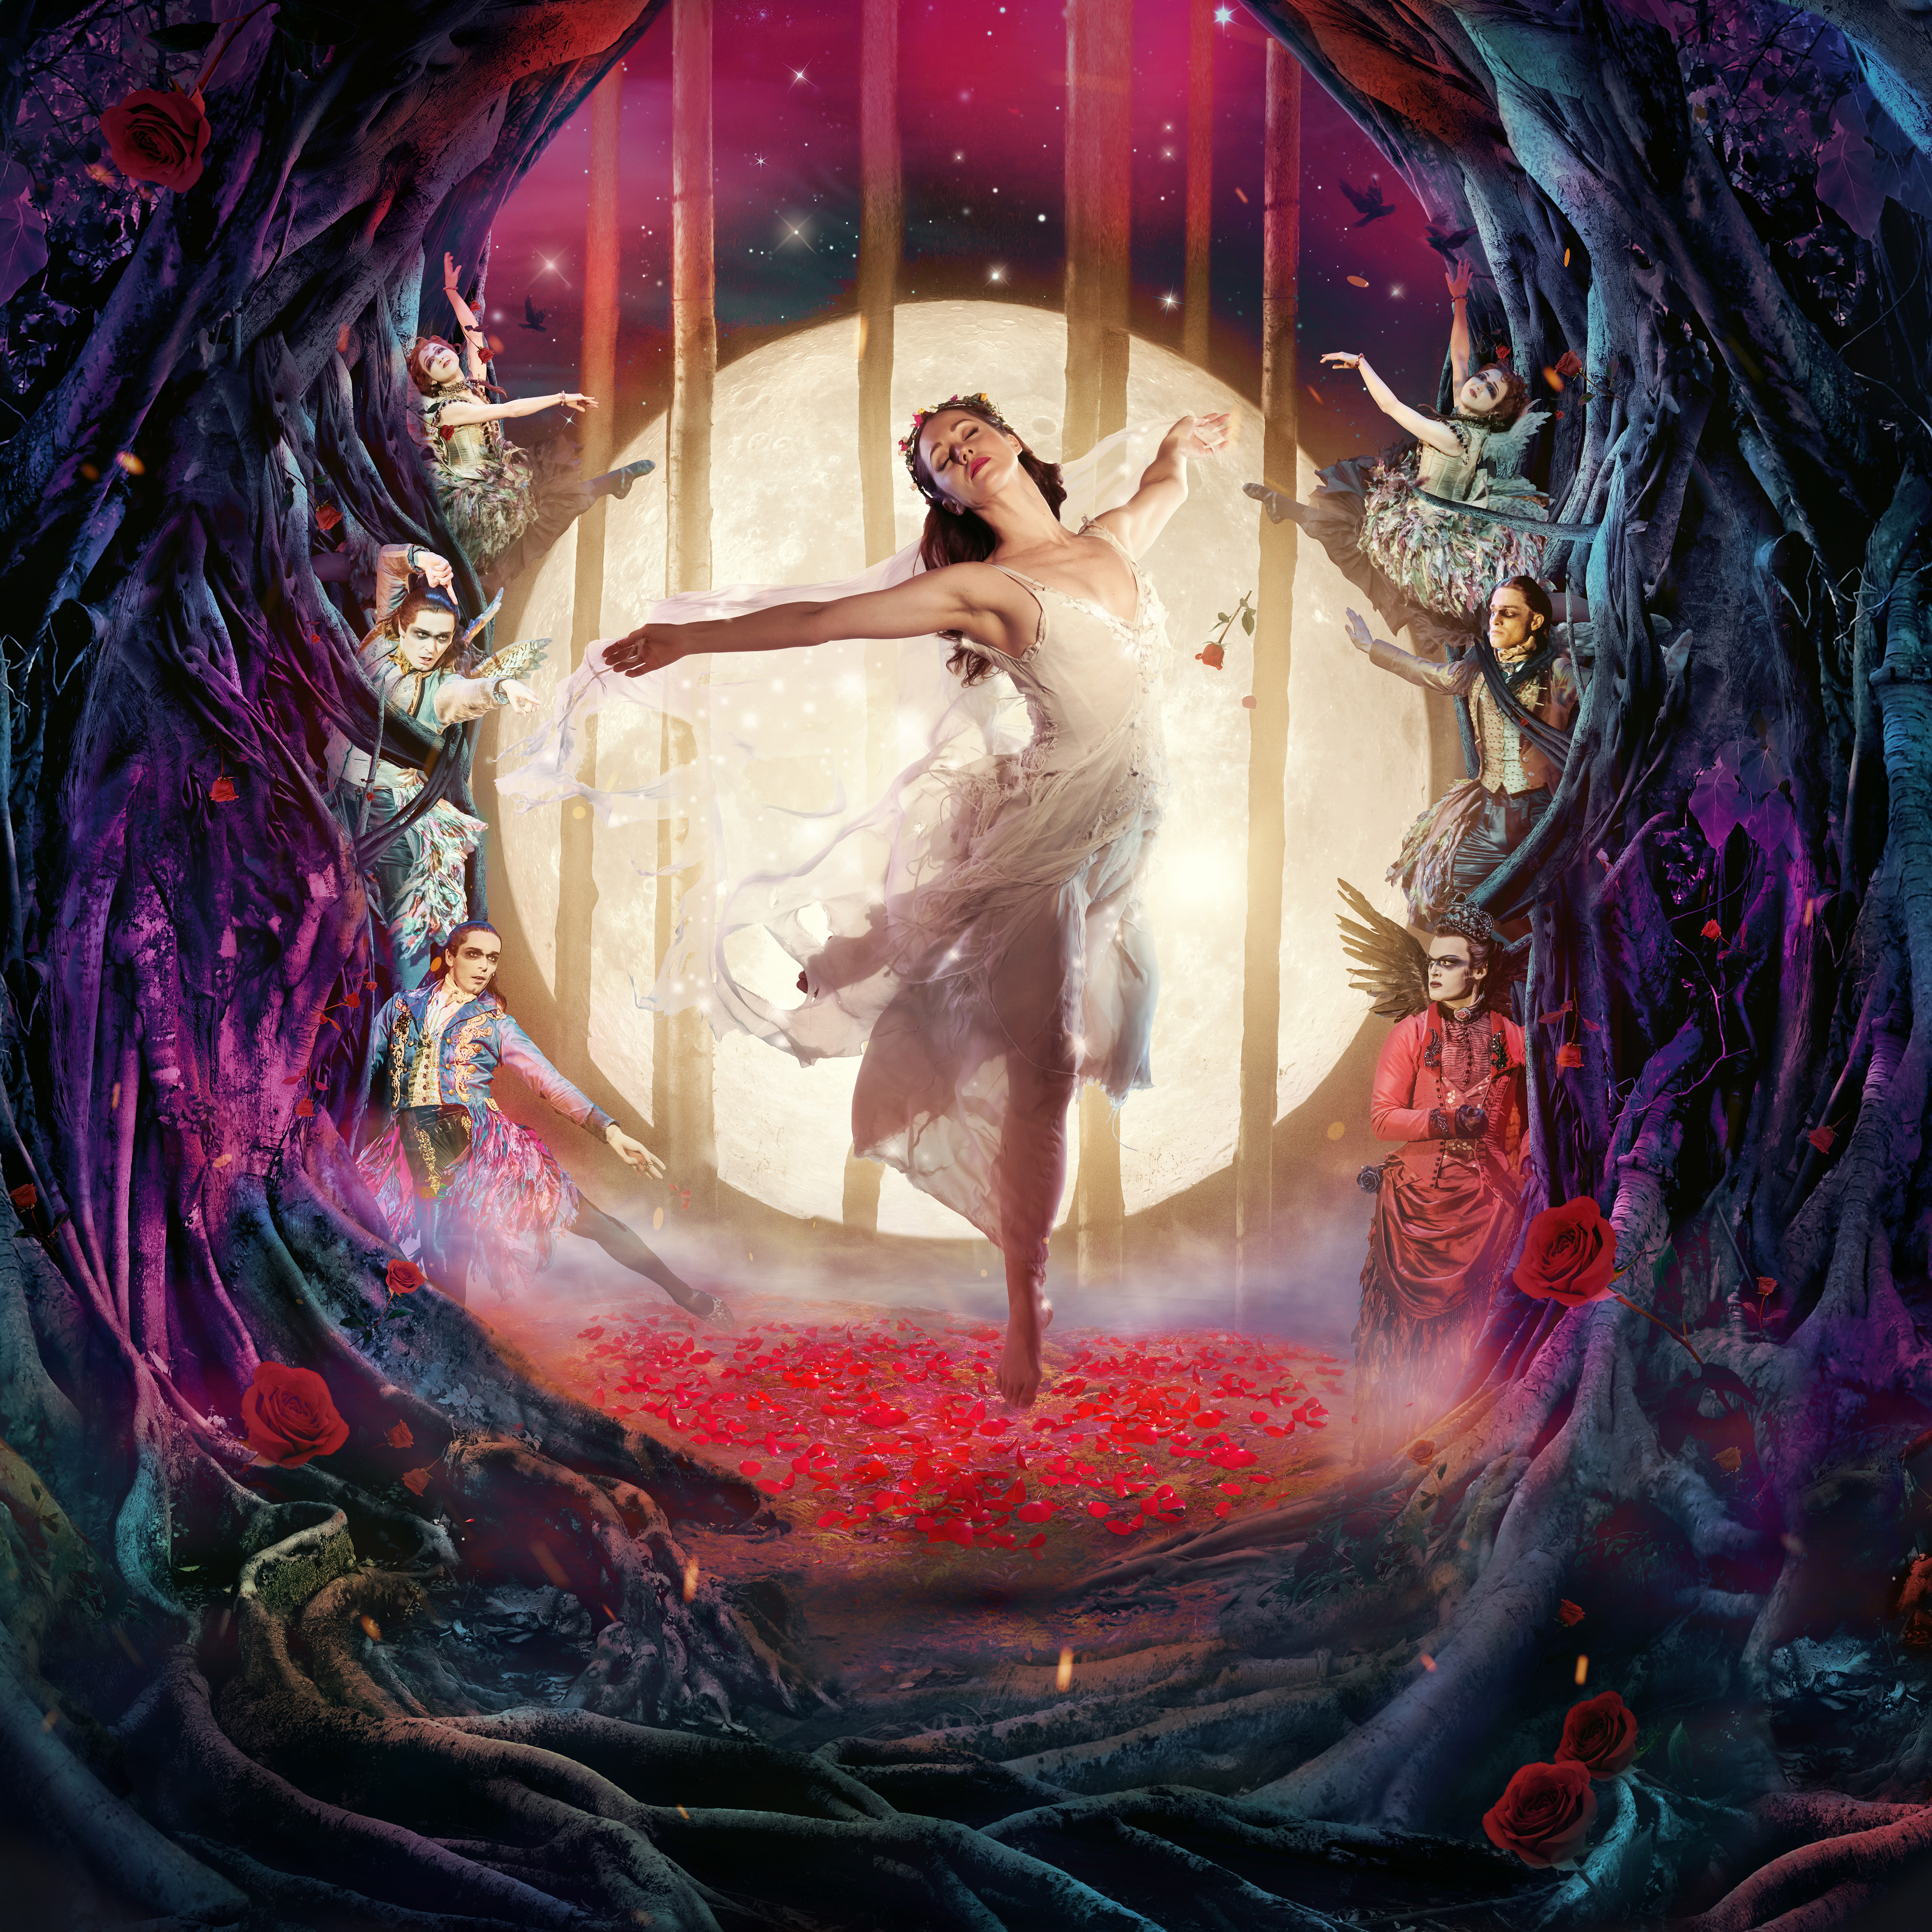 Promotional image of Sleeping Beauty ballet Sadlers Wells